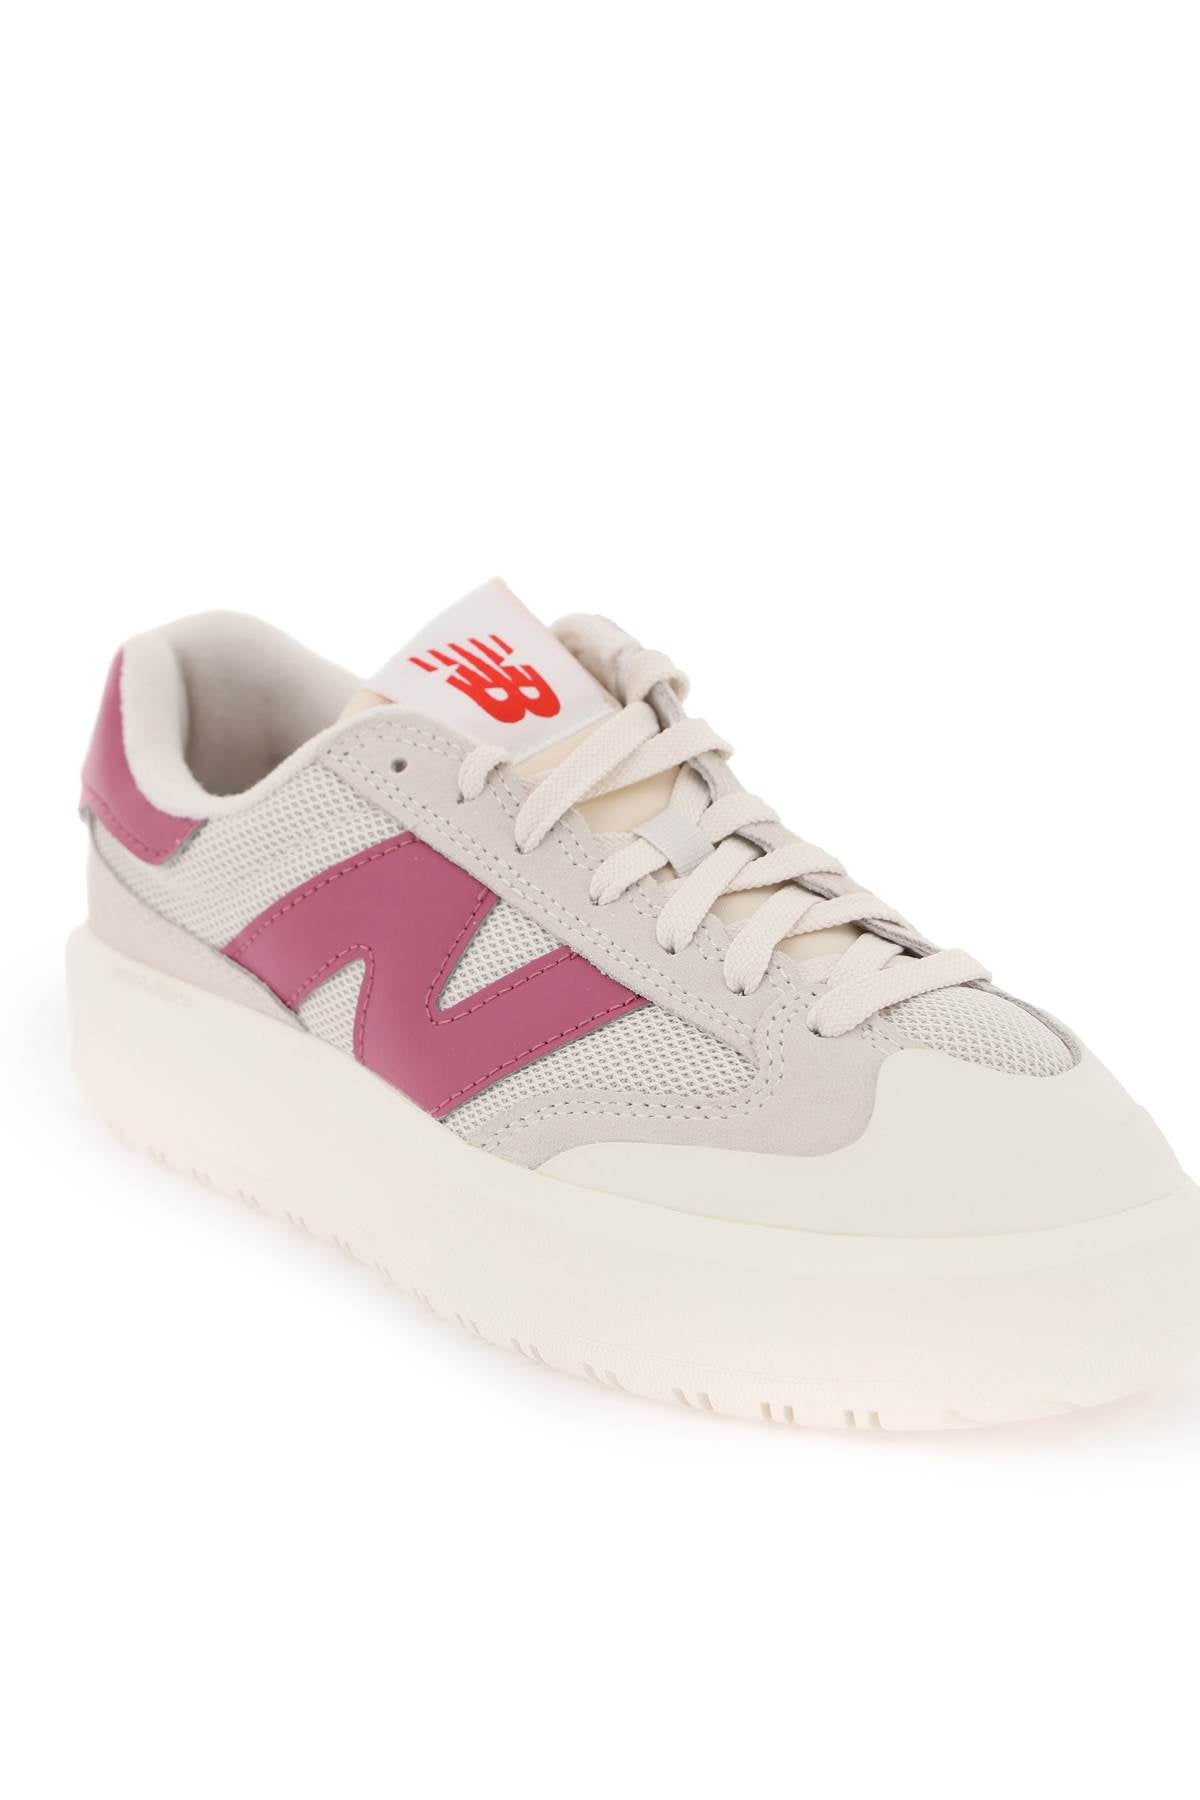 Shop New Balance Ct302 Sneakers In Beige, Pink